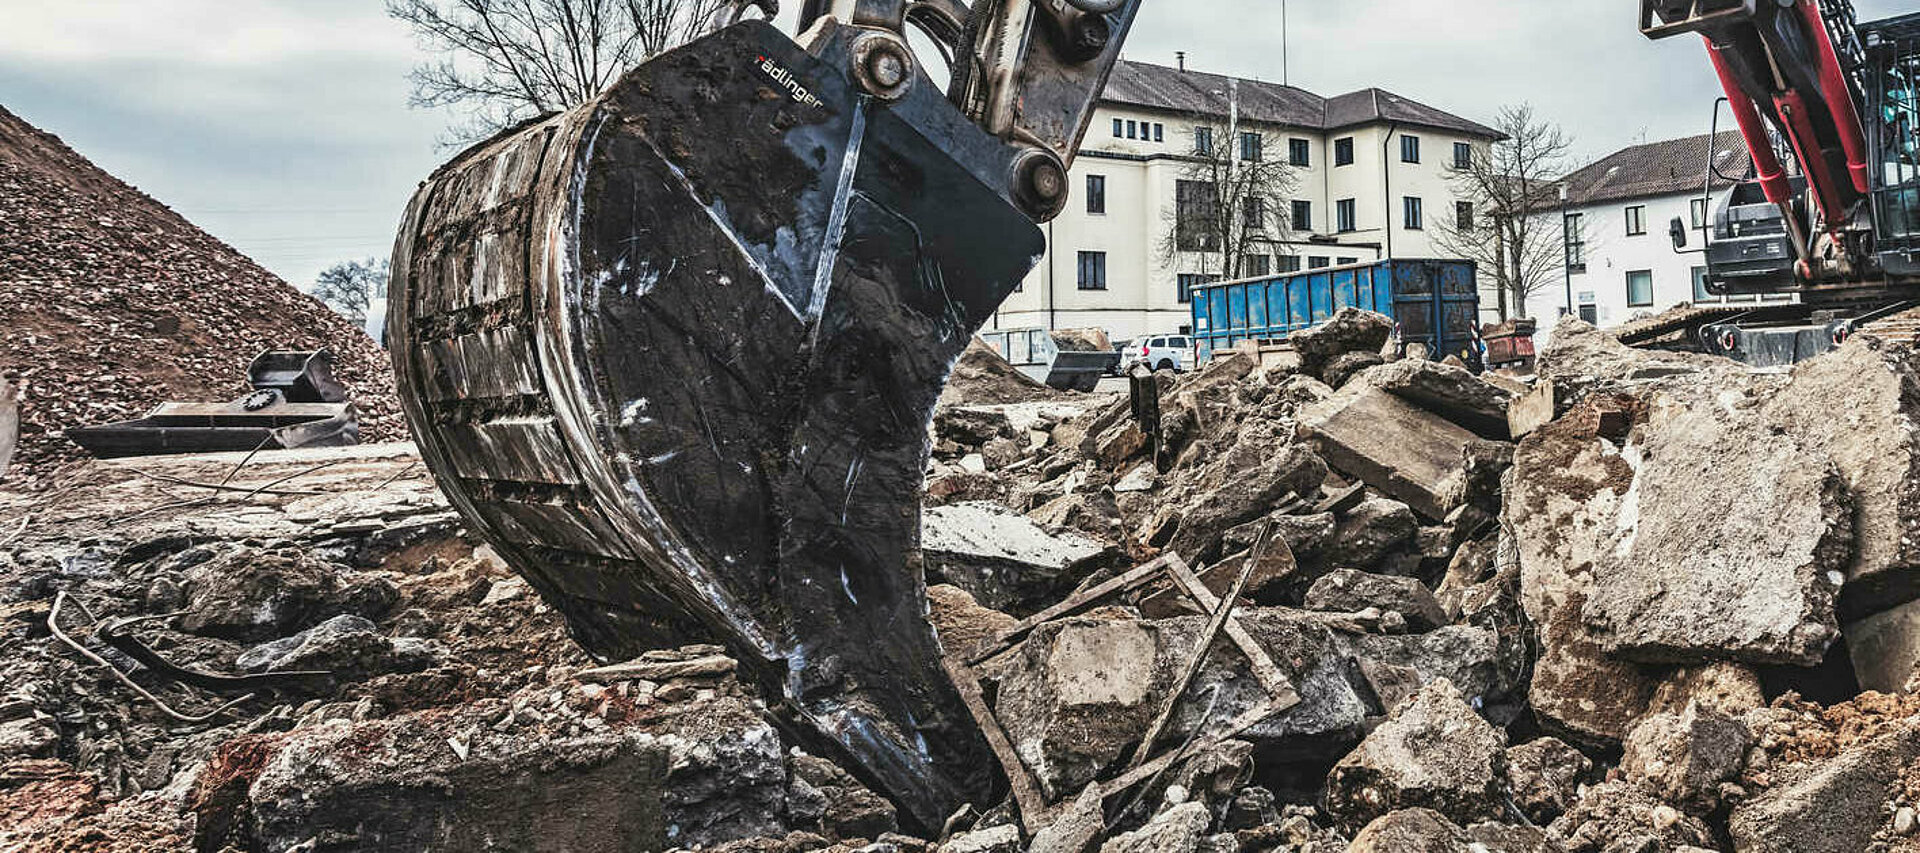 Excavator bucket in use on a demolition excavator